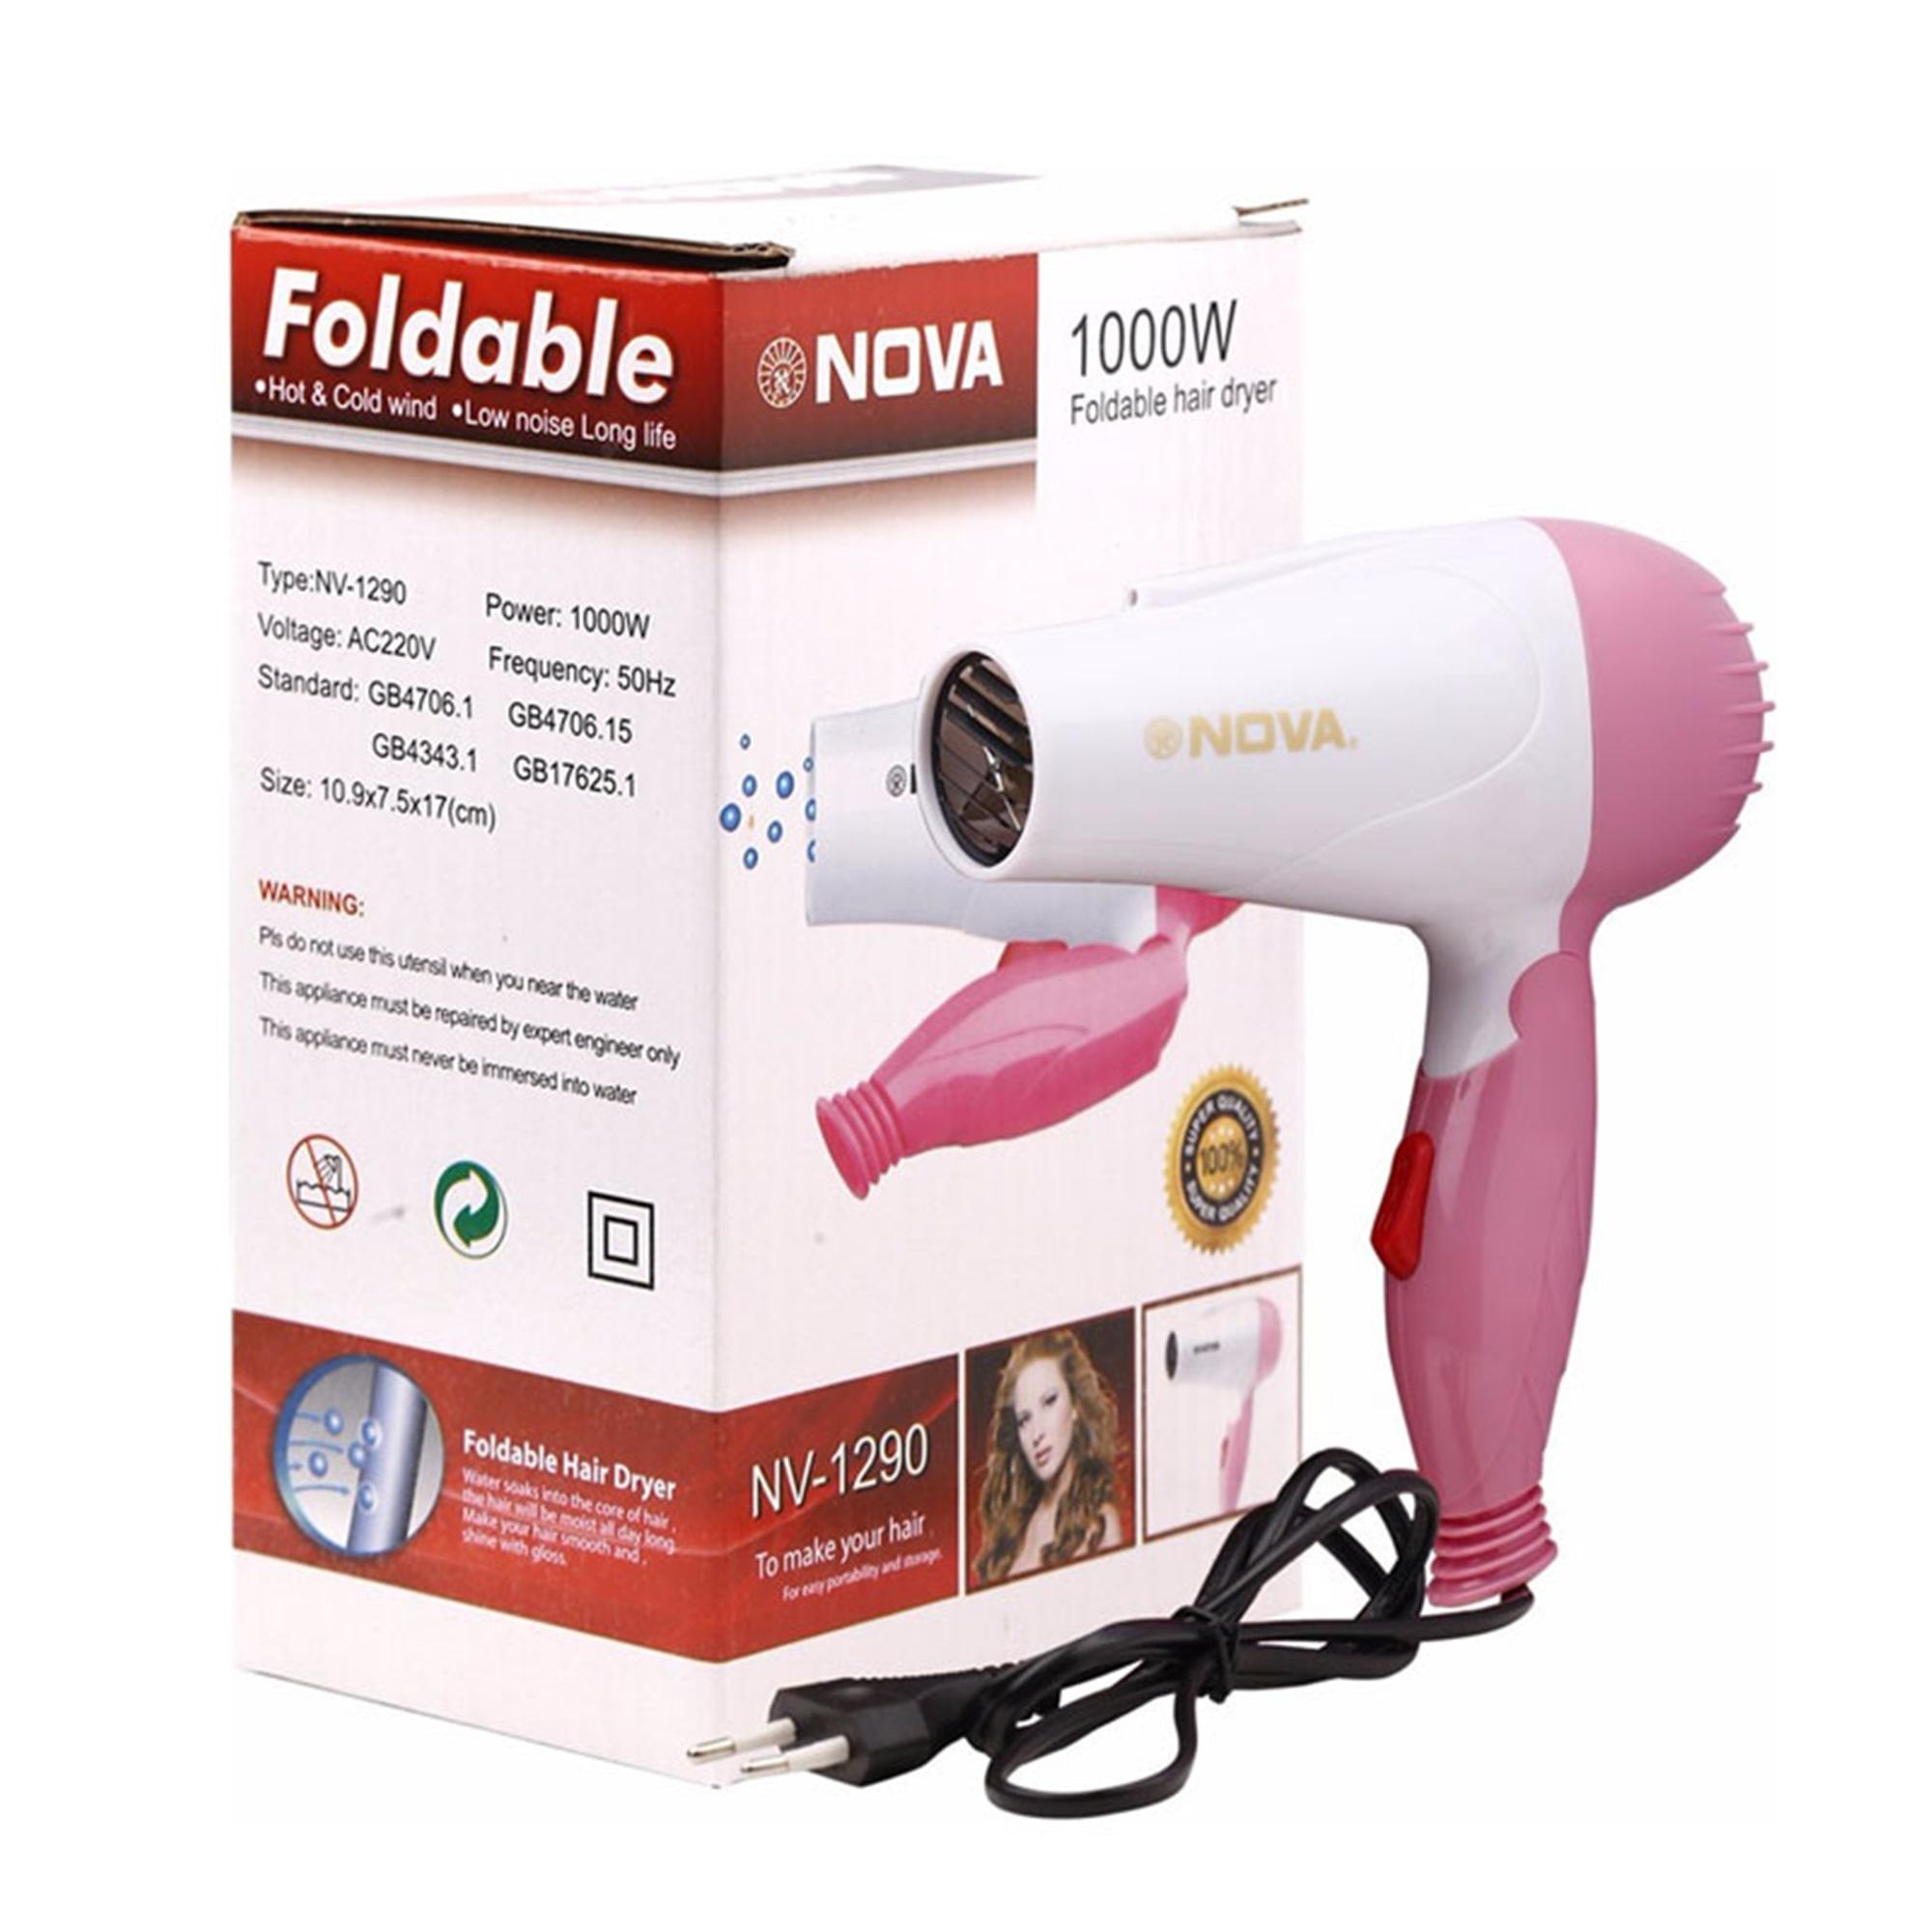 Foldable Nova Hair Dryer Price in Pakistan